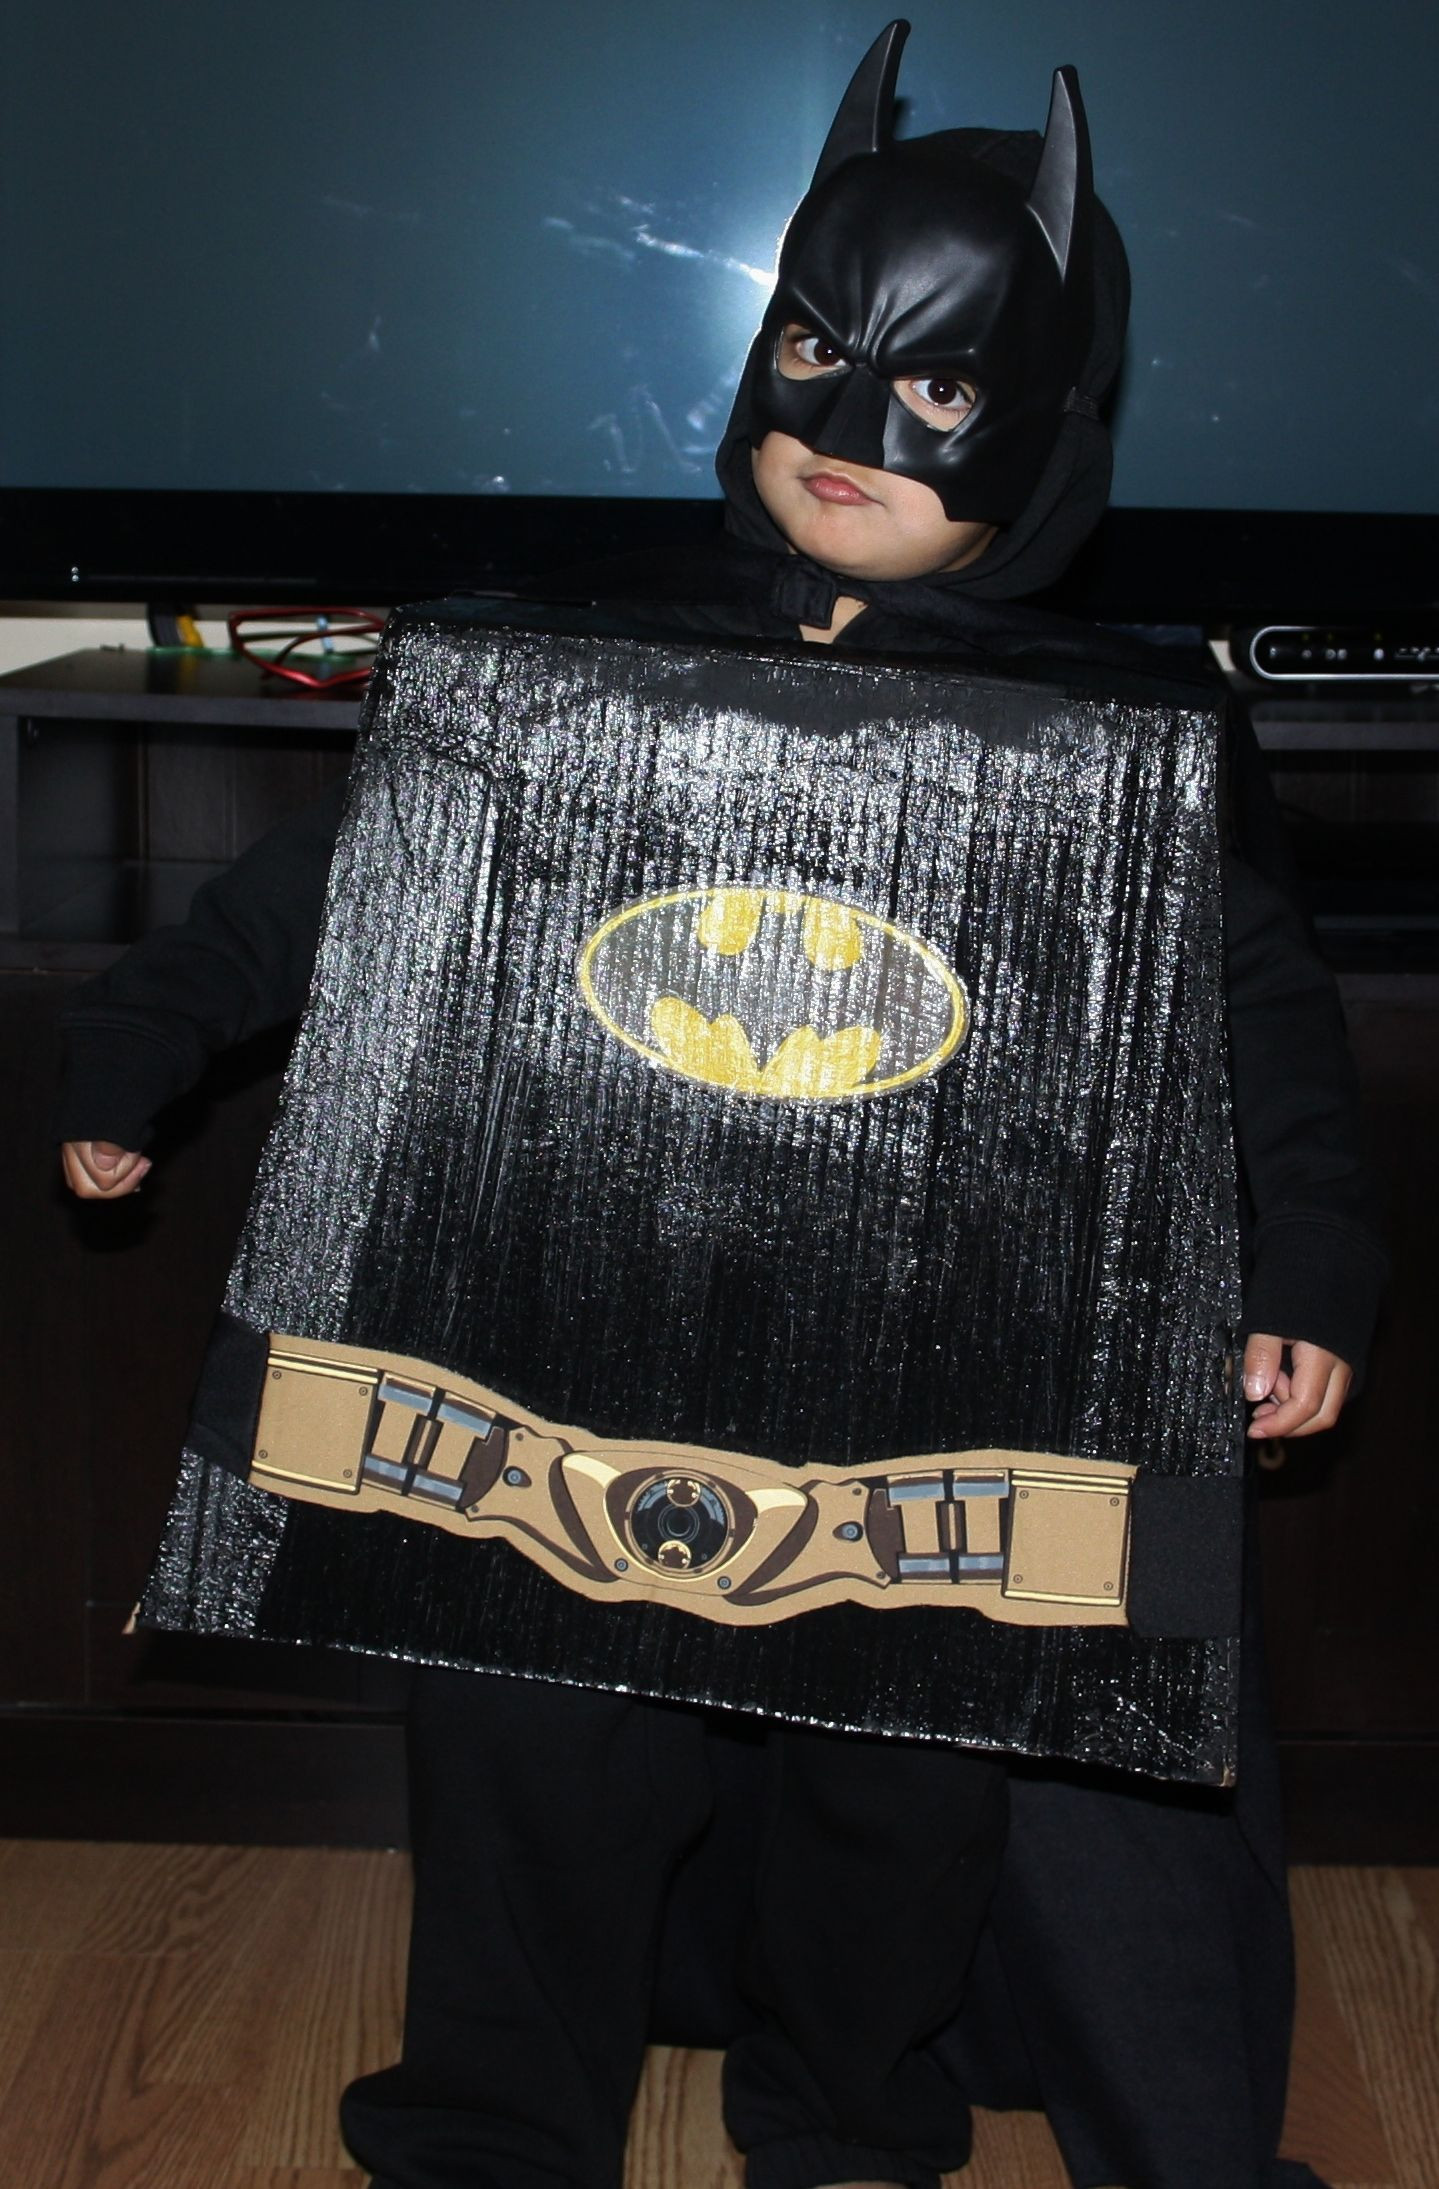 Best ideas about Lego Batman Costume DIY
. Save or Pin Lego Batman Halloween costume DIY Now.